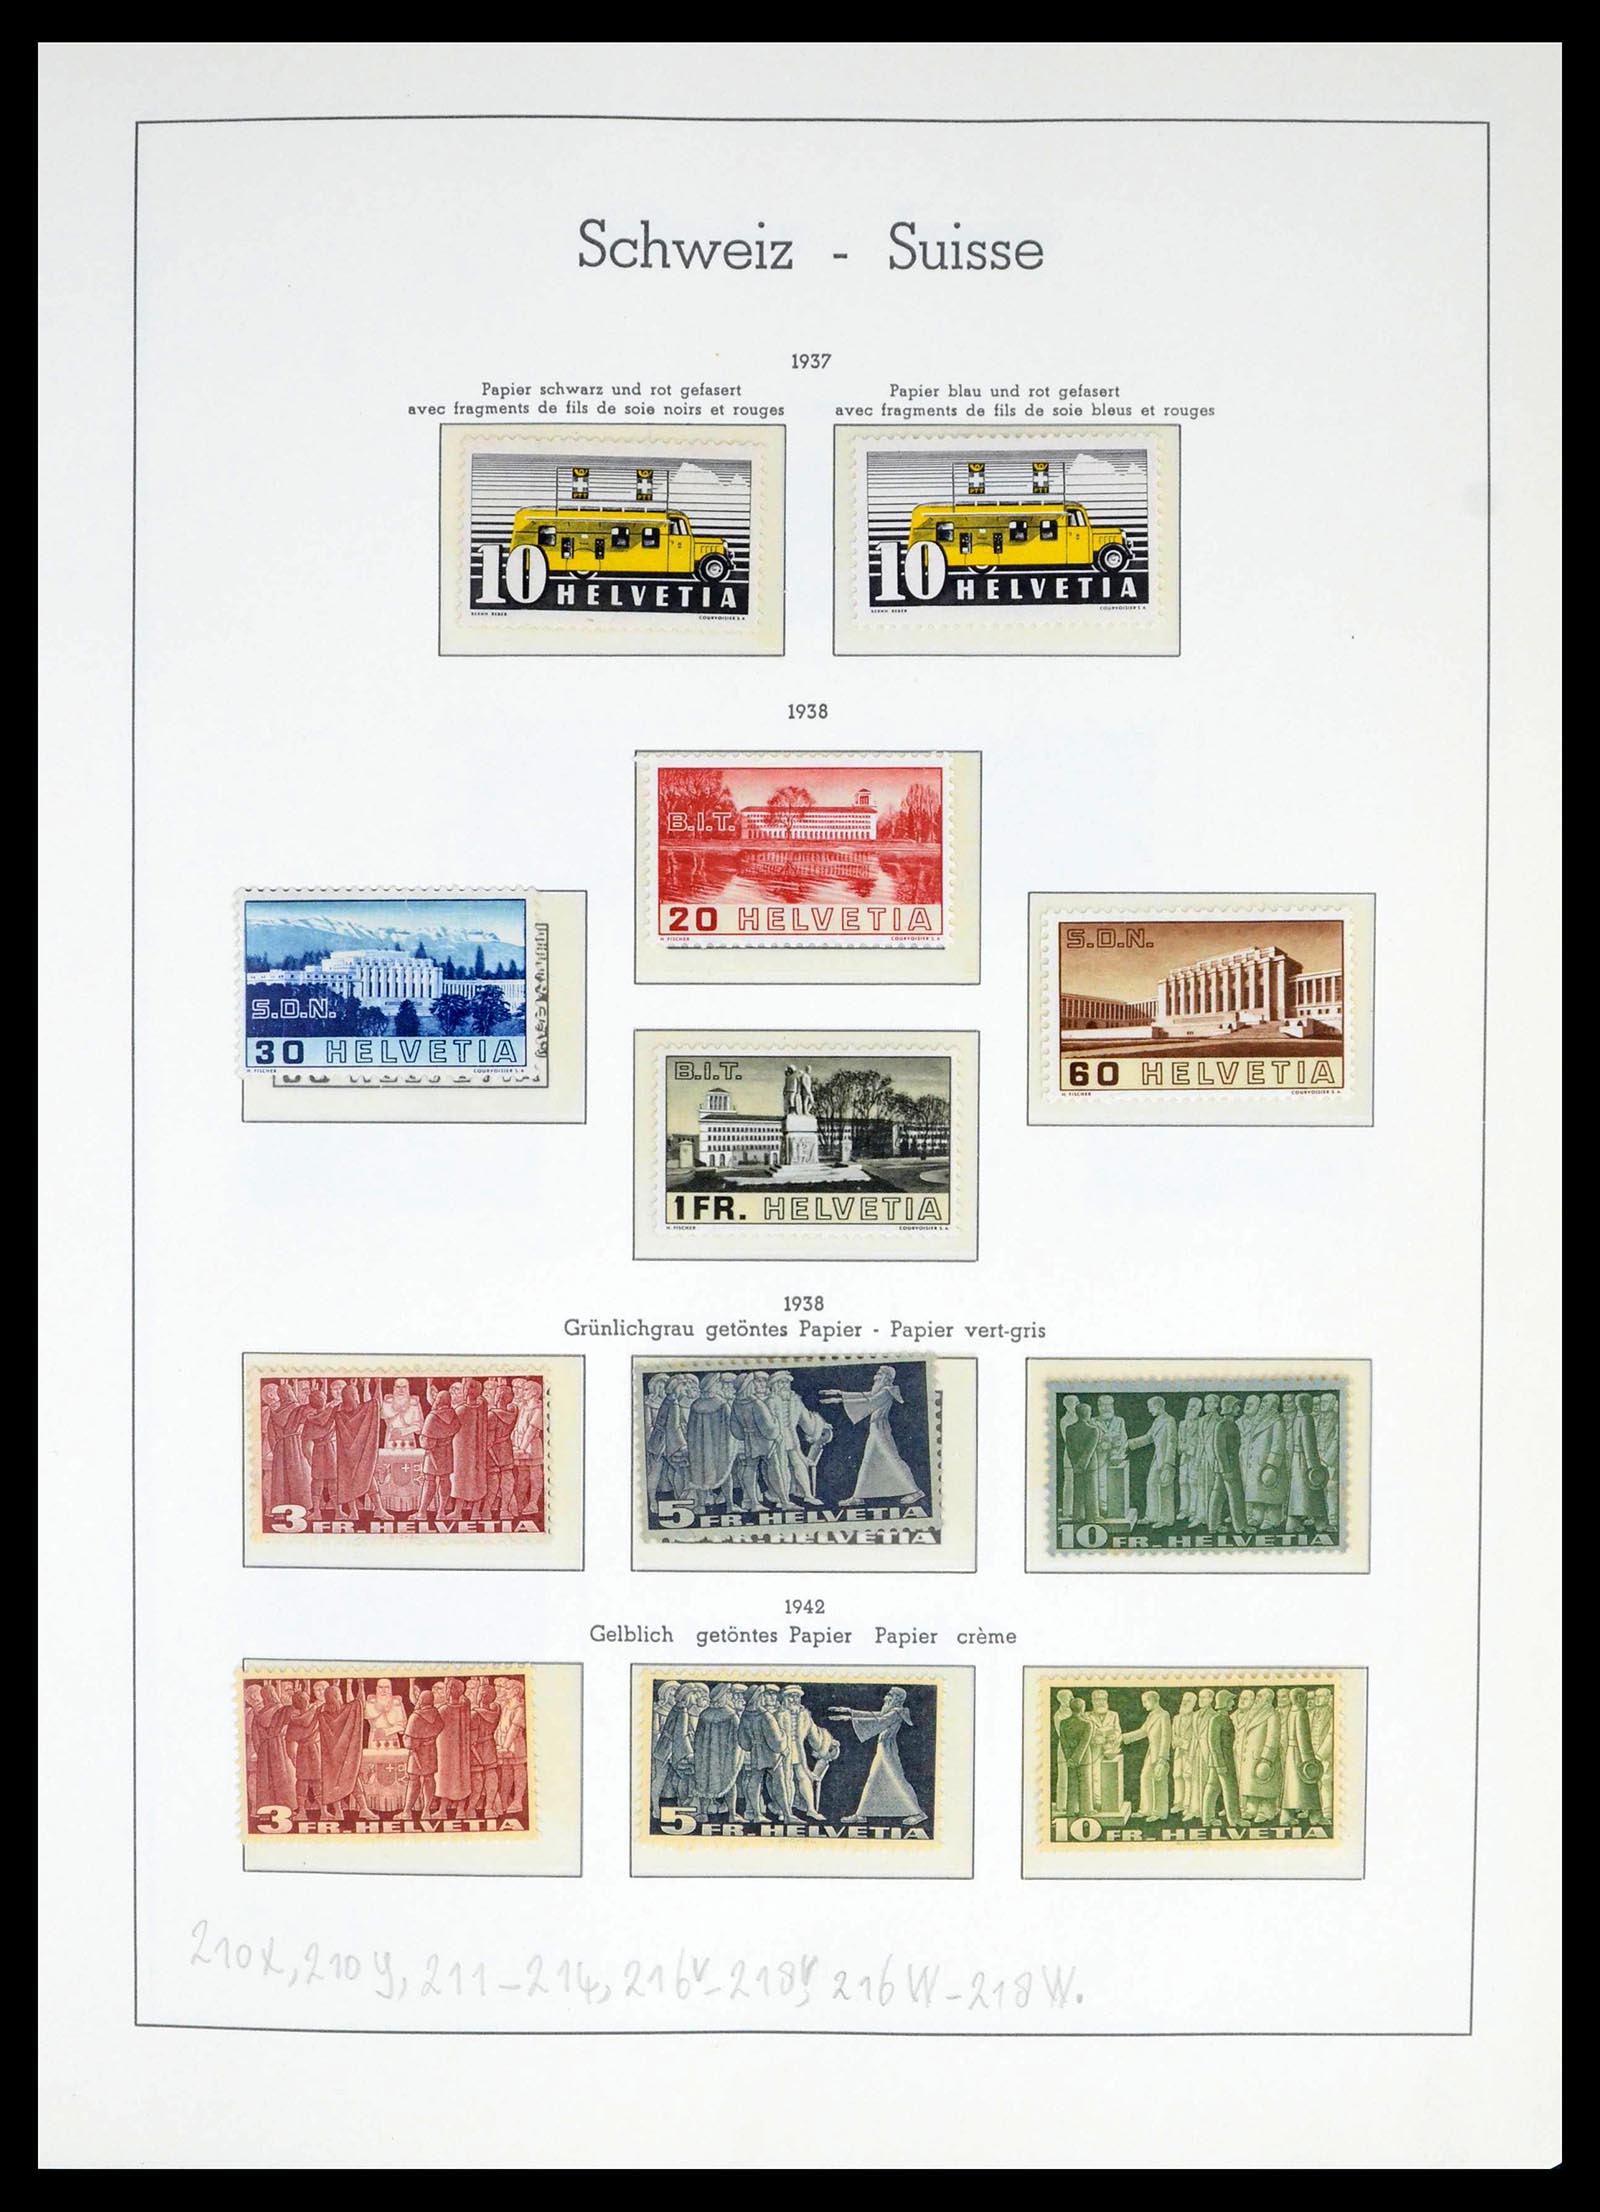 39420 0022 - Stamp collection 39420 Switzerland 1862-1974.